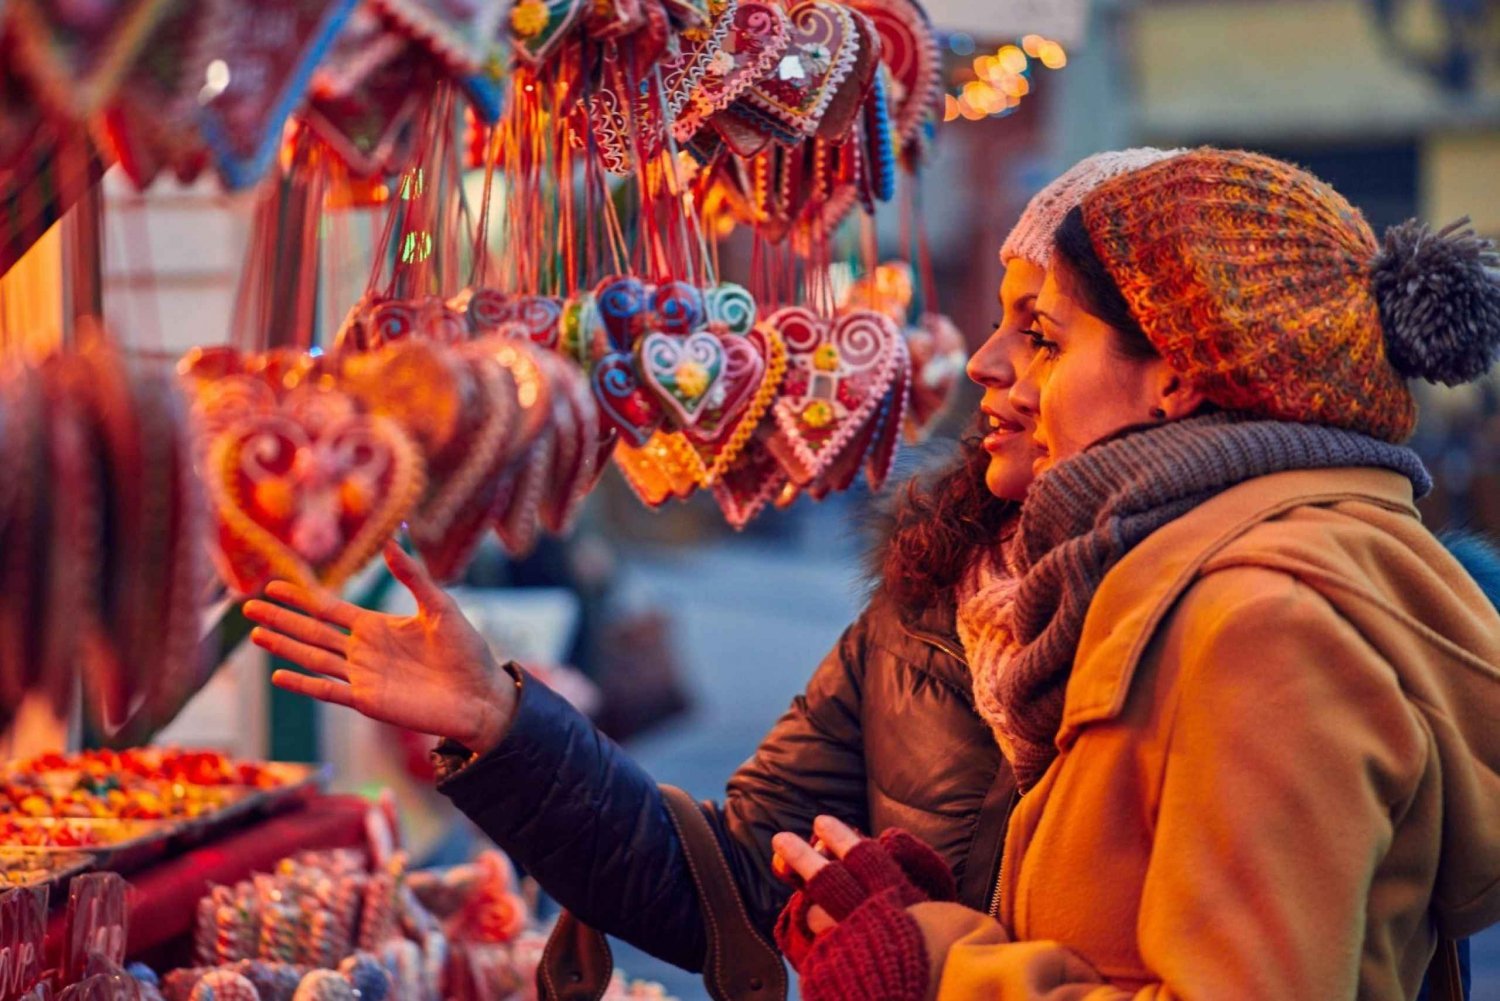 Experience-Krakows-Exquisite-Christmas-Markets